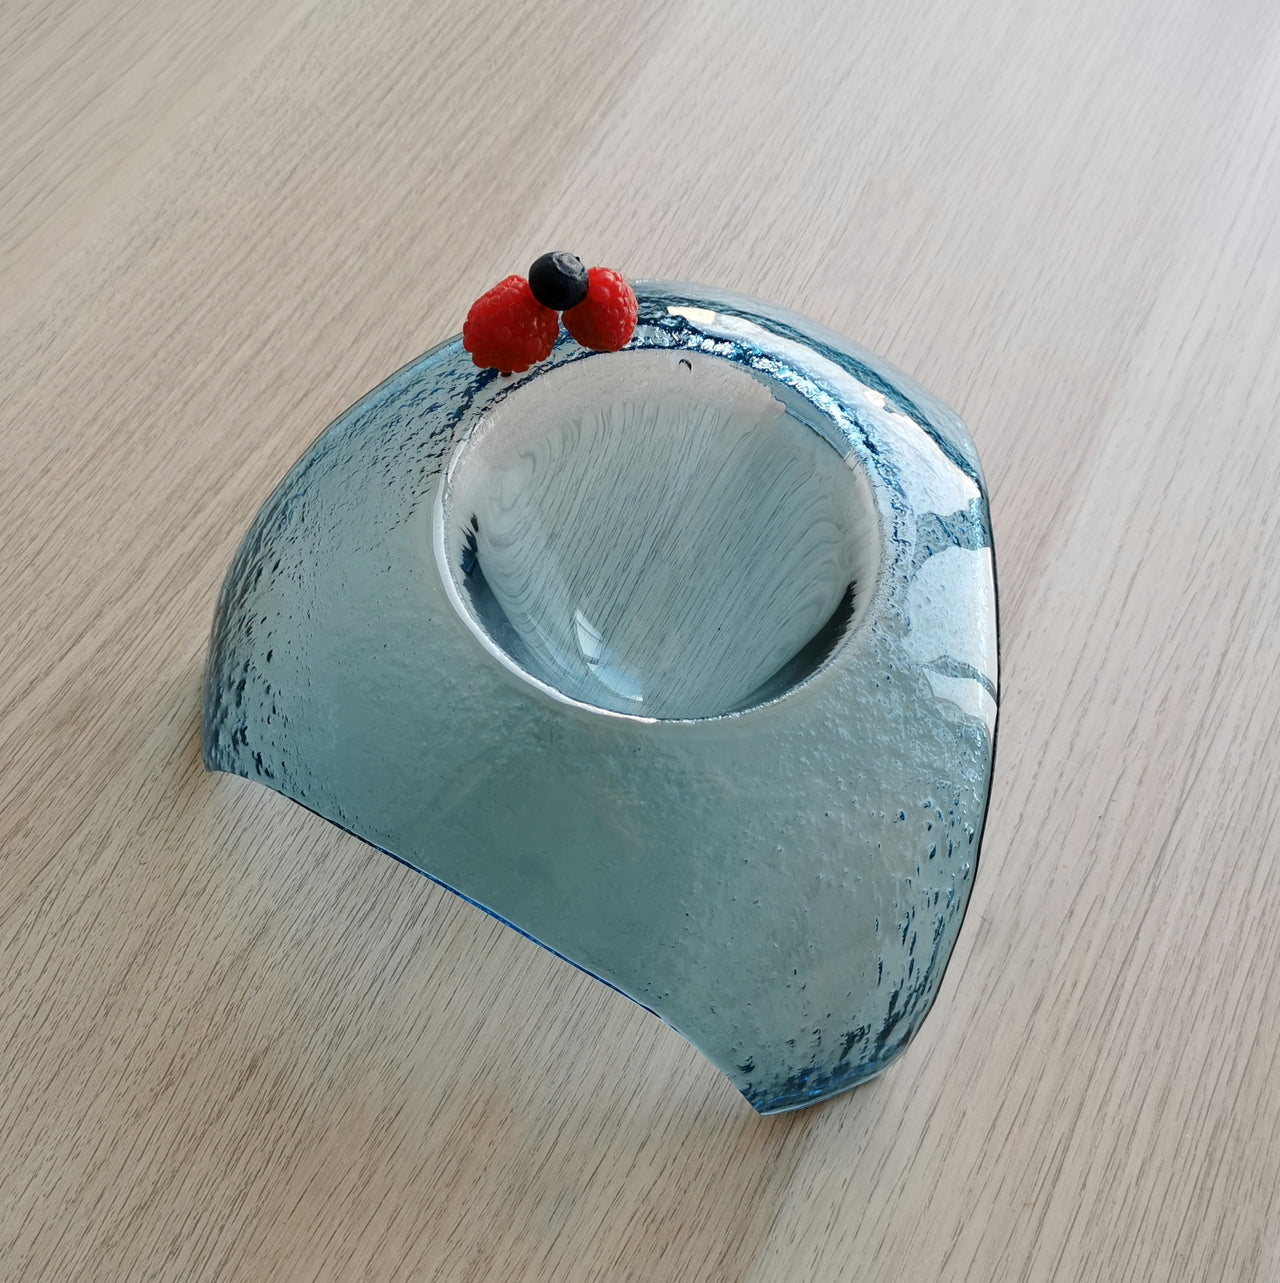 SOL Minimalist Sky Blue Glass Bowl. Artistic One Of A Kind Glass Bowl - 3 15/16" (10cm.)